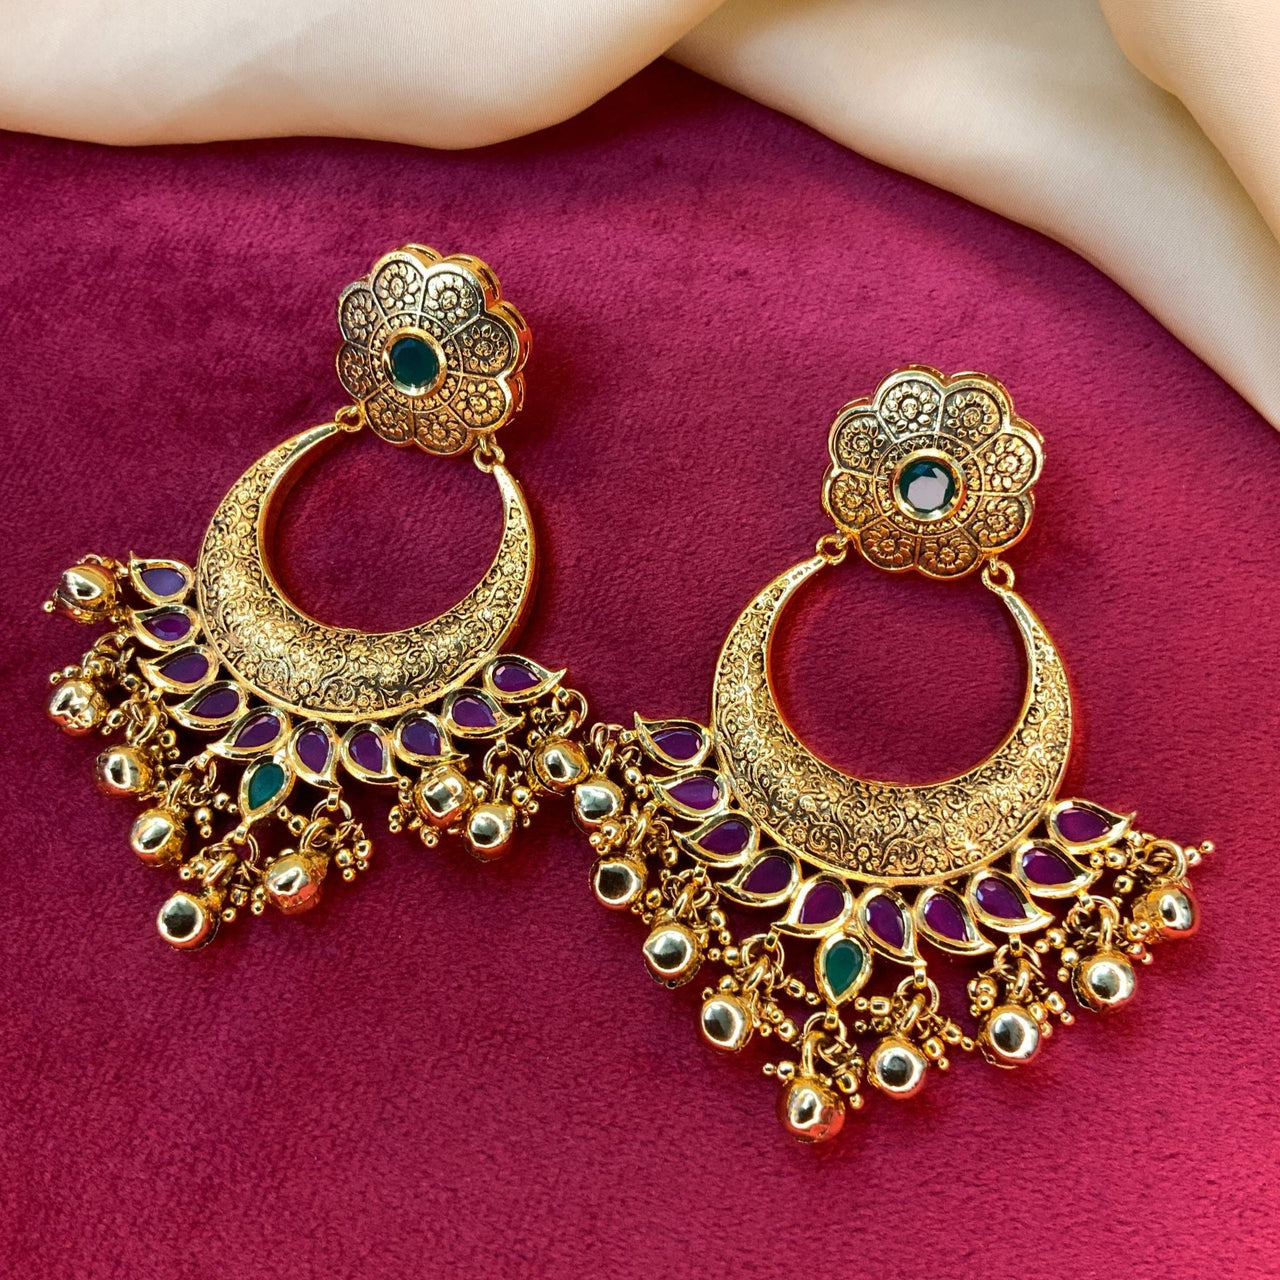 Matt Gold Plated Half Chand Shape With Pearls Earrings, गोल्ड प्लेटेड  इयररिंग, सोना चढ़ी कान की बाली - Lookethnic Handicrafts LLP, Mumbai | ID:  2852803953973